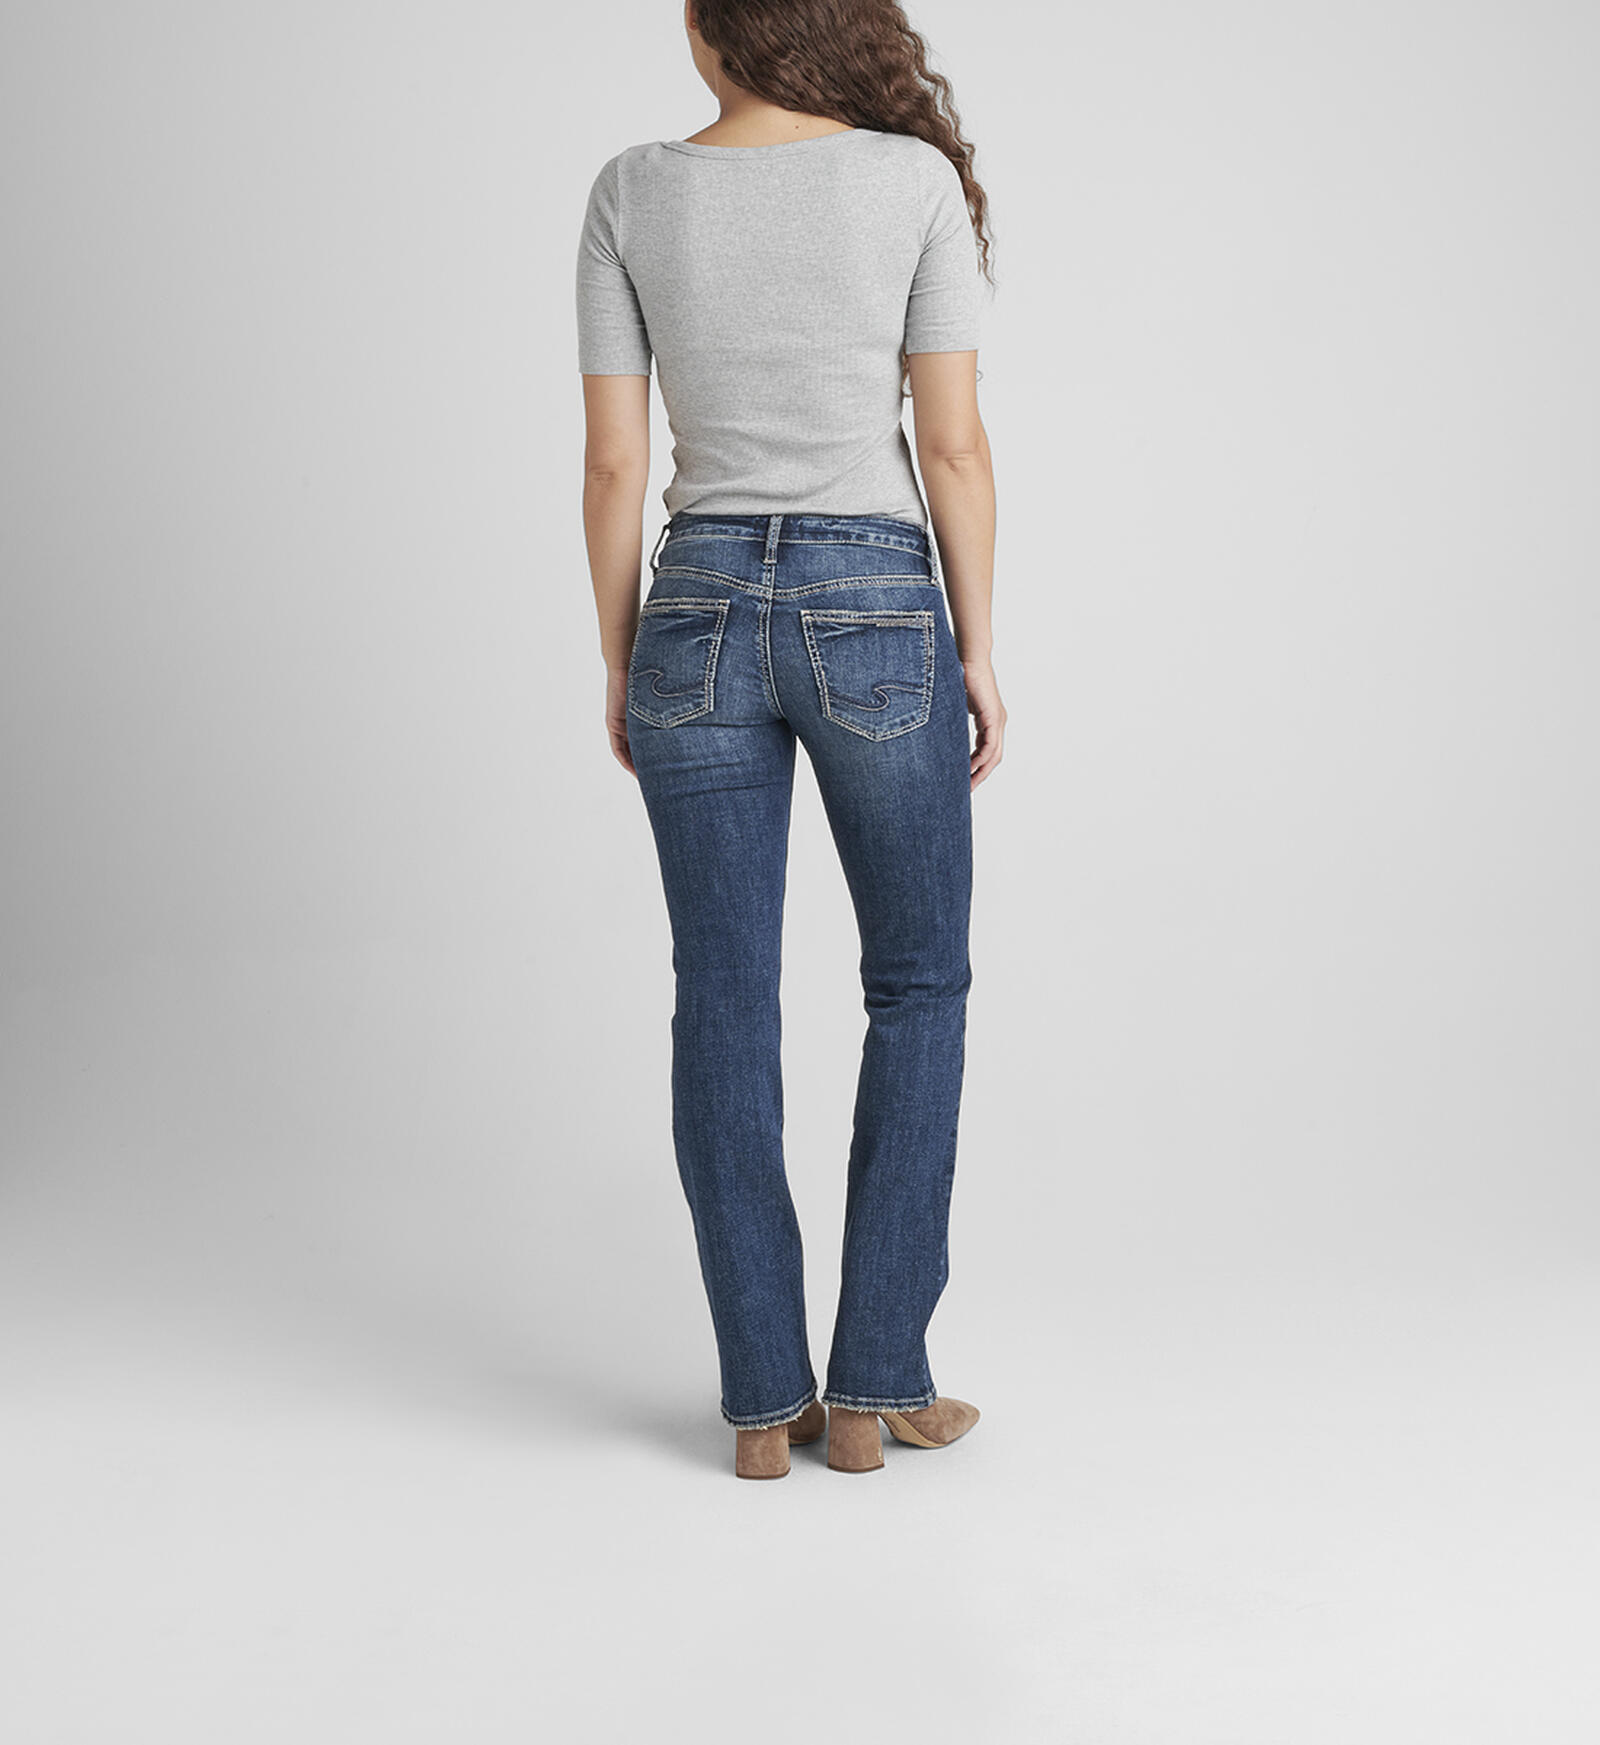 Bootcut Jeans Low Rise - Shop on Pinterest